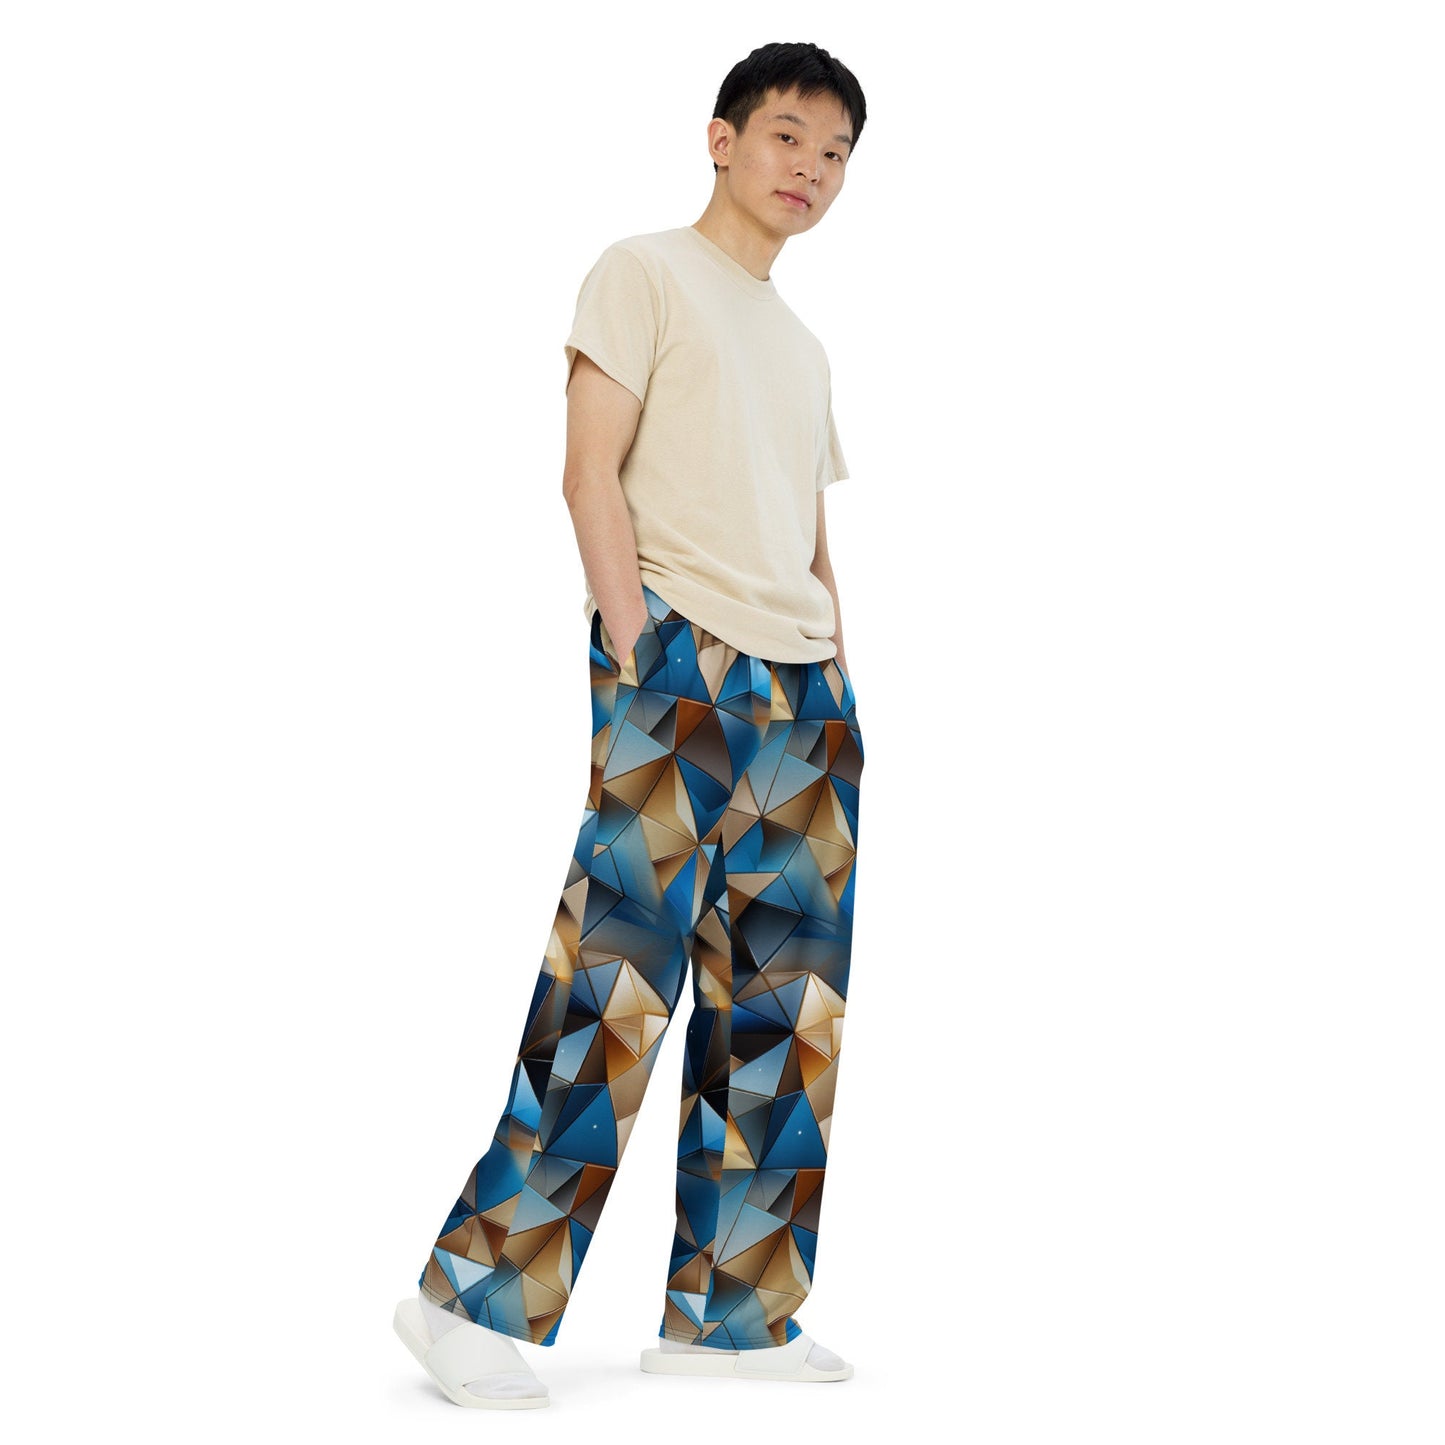 Festive 3D Triangle Design Unisex Pants - Vibrant Gold and Blue - Wide-Leg